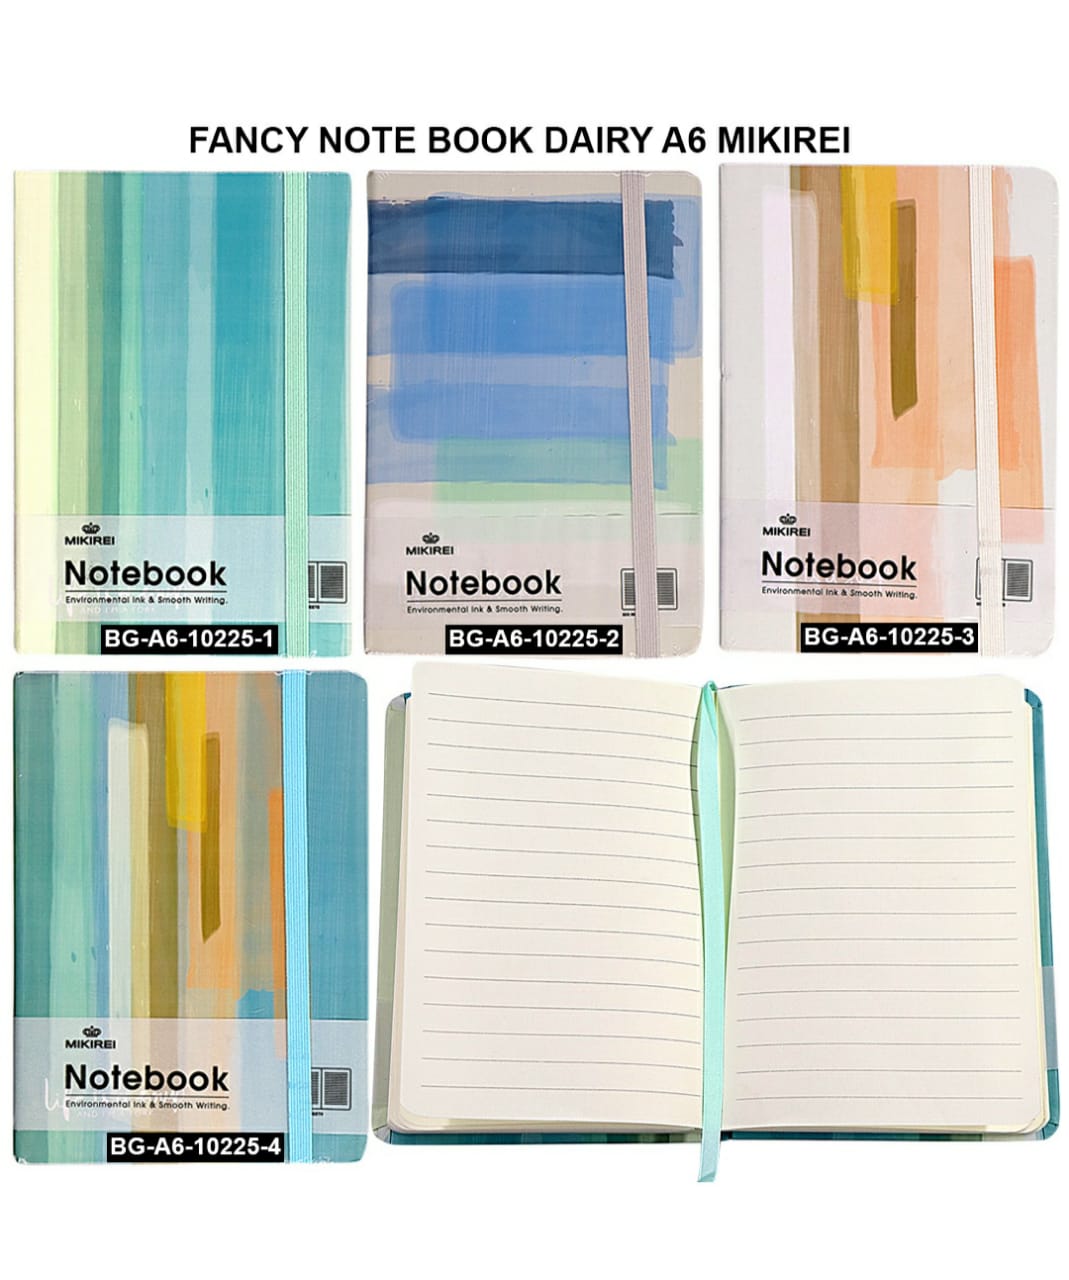 Note Book Dairy A6 Mikirei A6-10225 | INKARTO